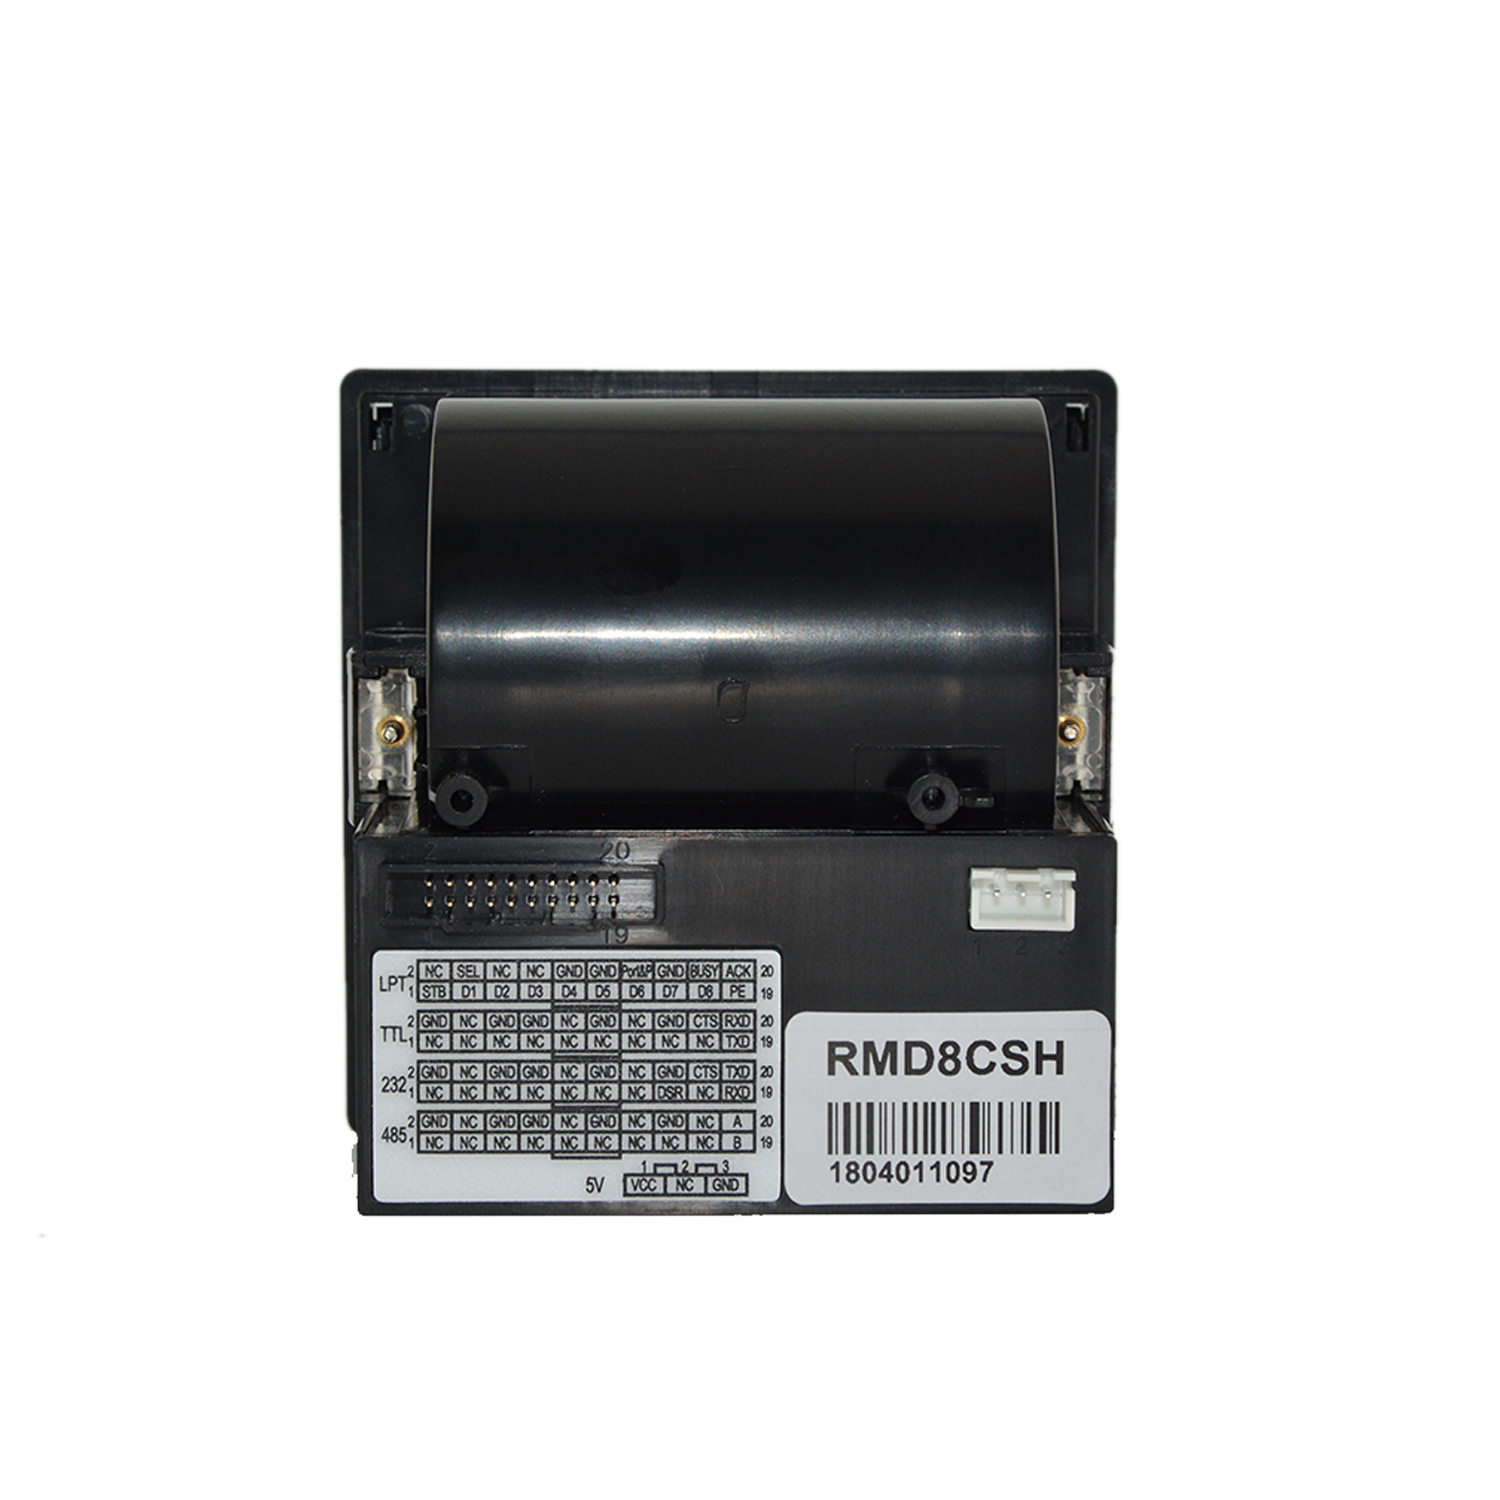 HCC-D8 ESC/POS 58mm Receipt Mount Thermal Panel Printer 